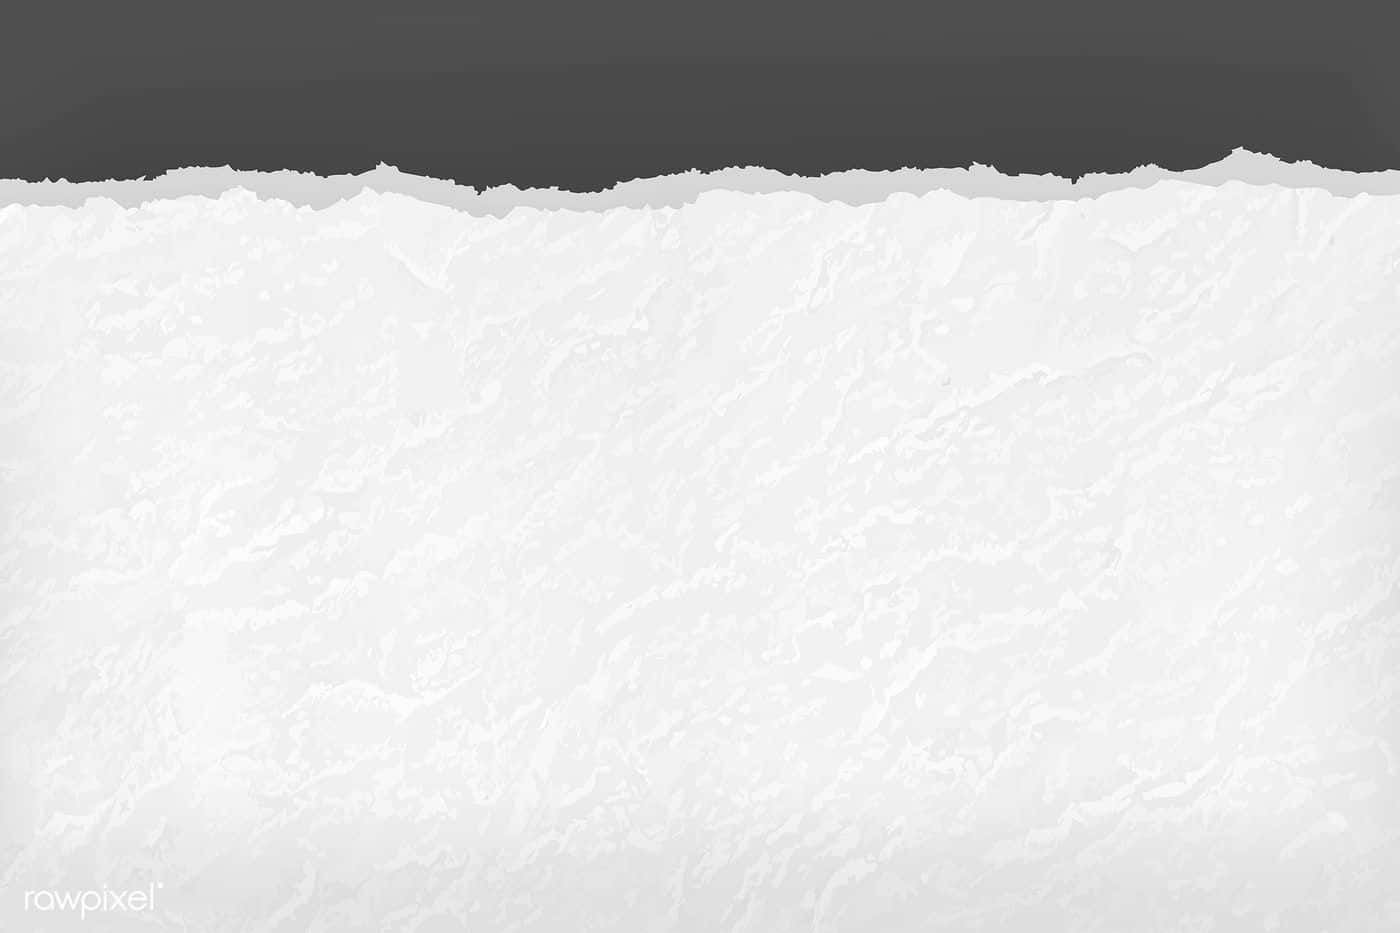 Rough Edge White Torn Paper Wallpaper